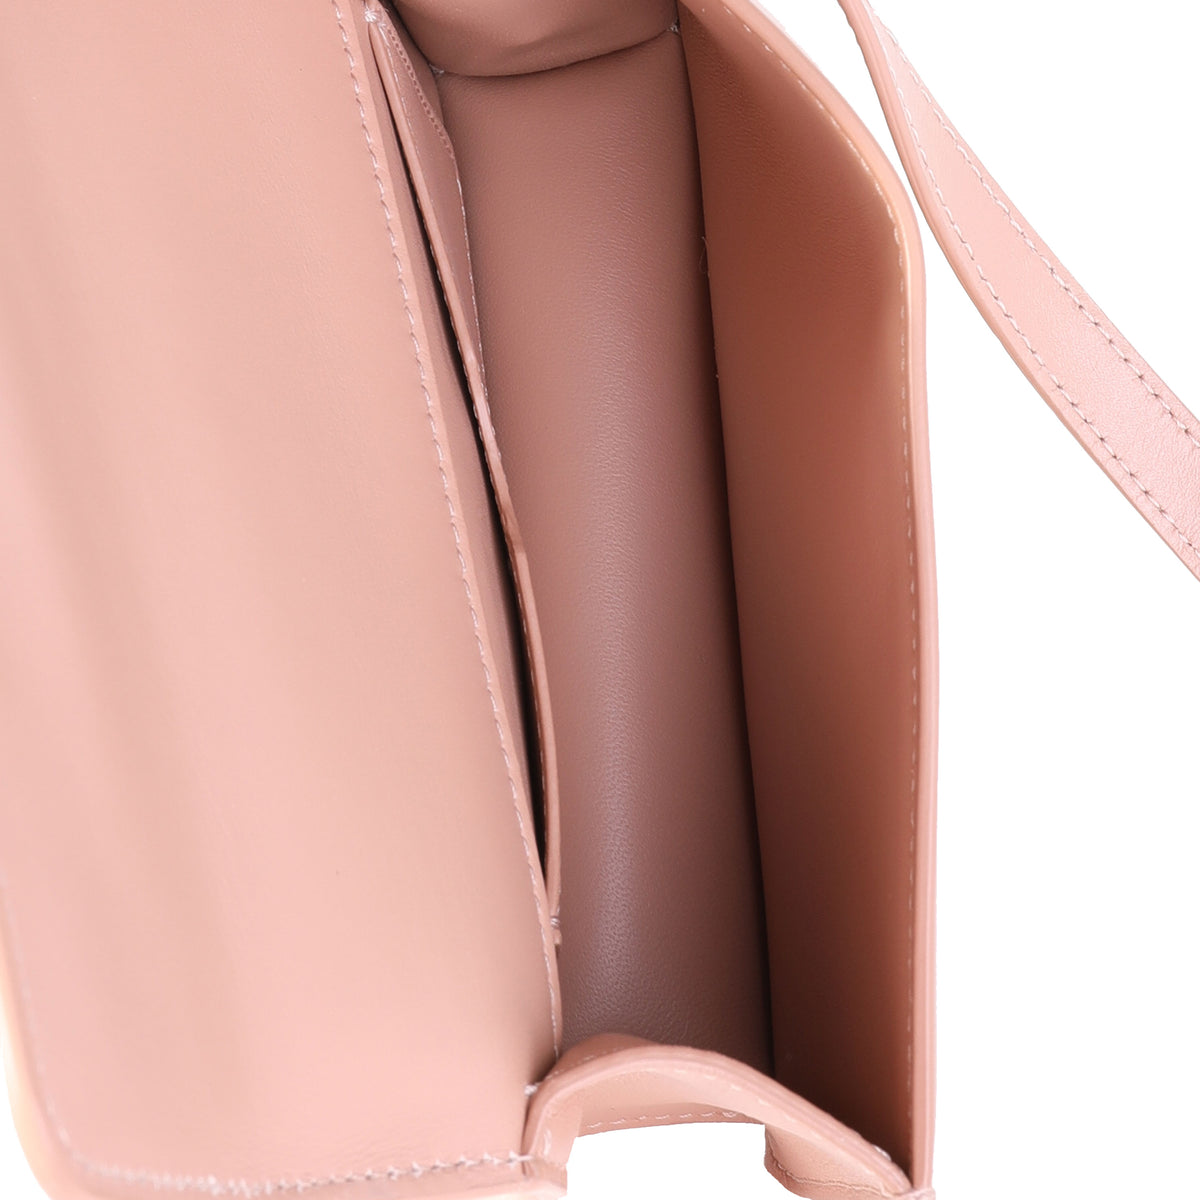 Christian Dior Rose Des Vents Calfskin 30 Montaigne Micro Bag